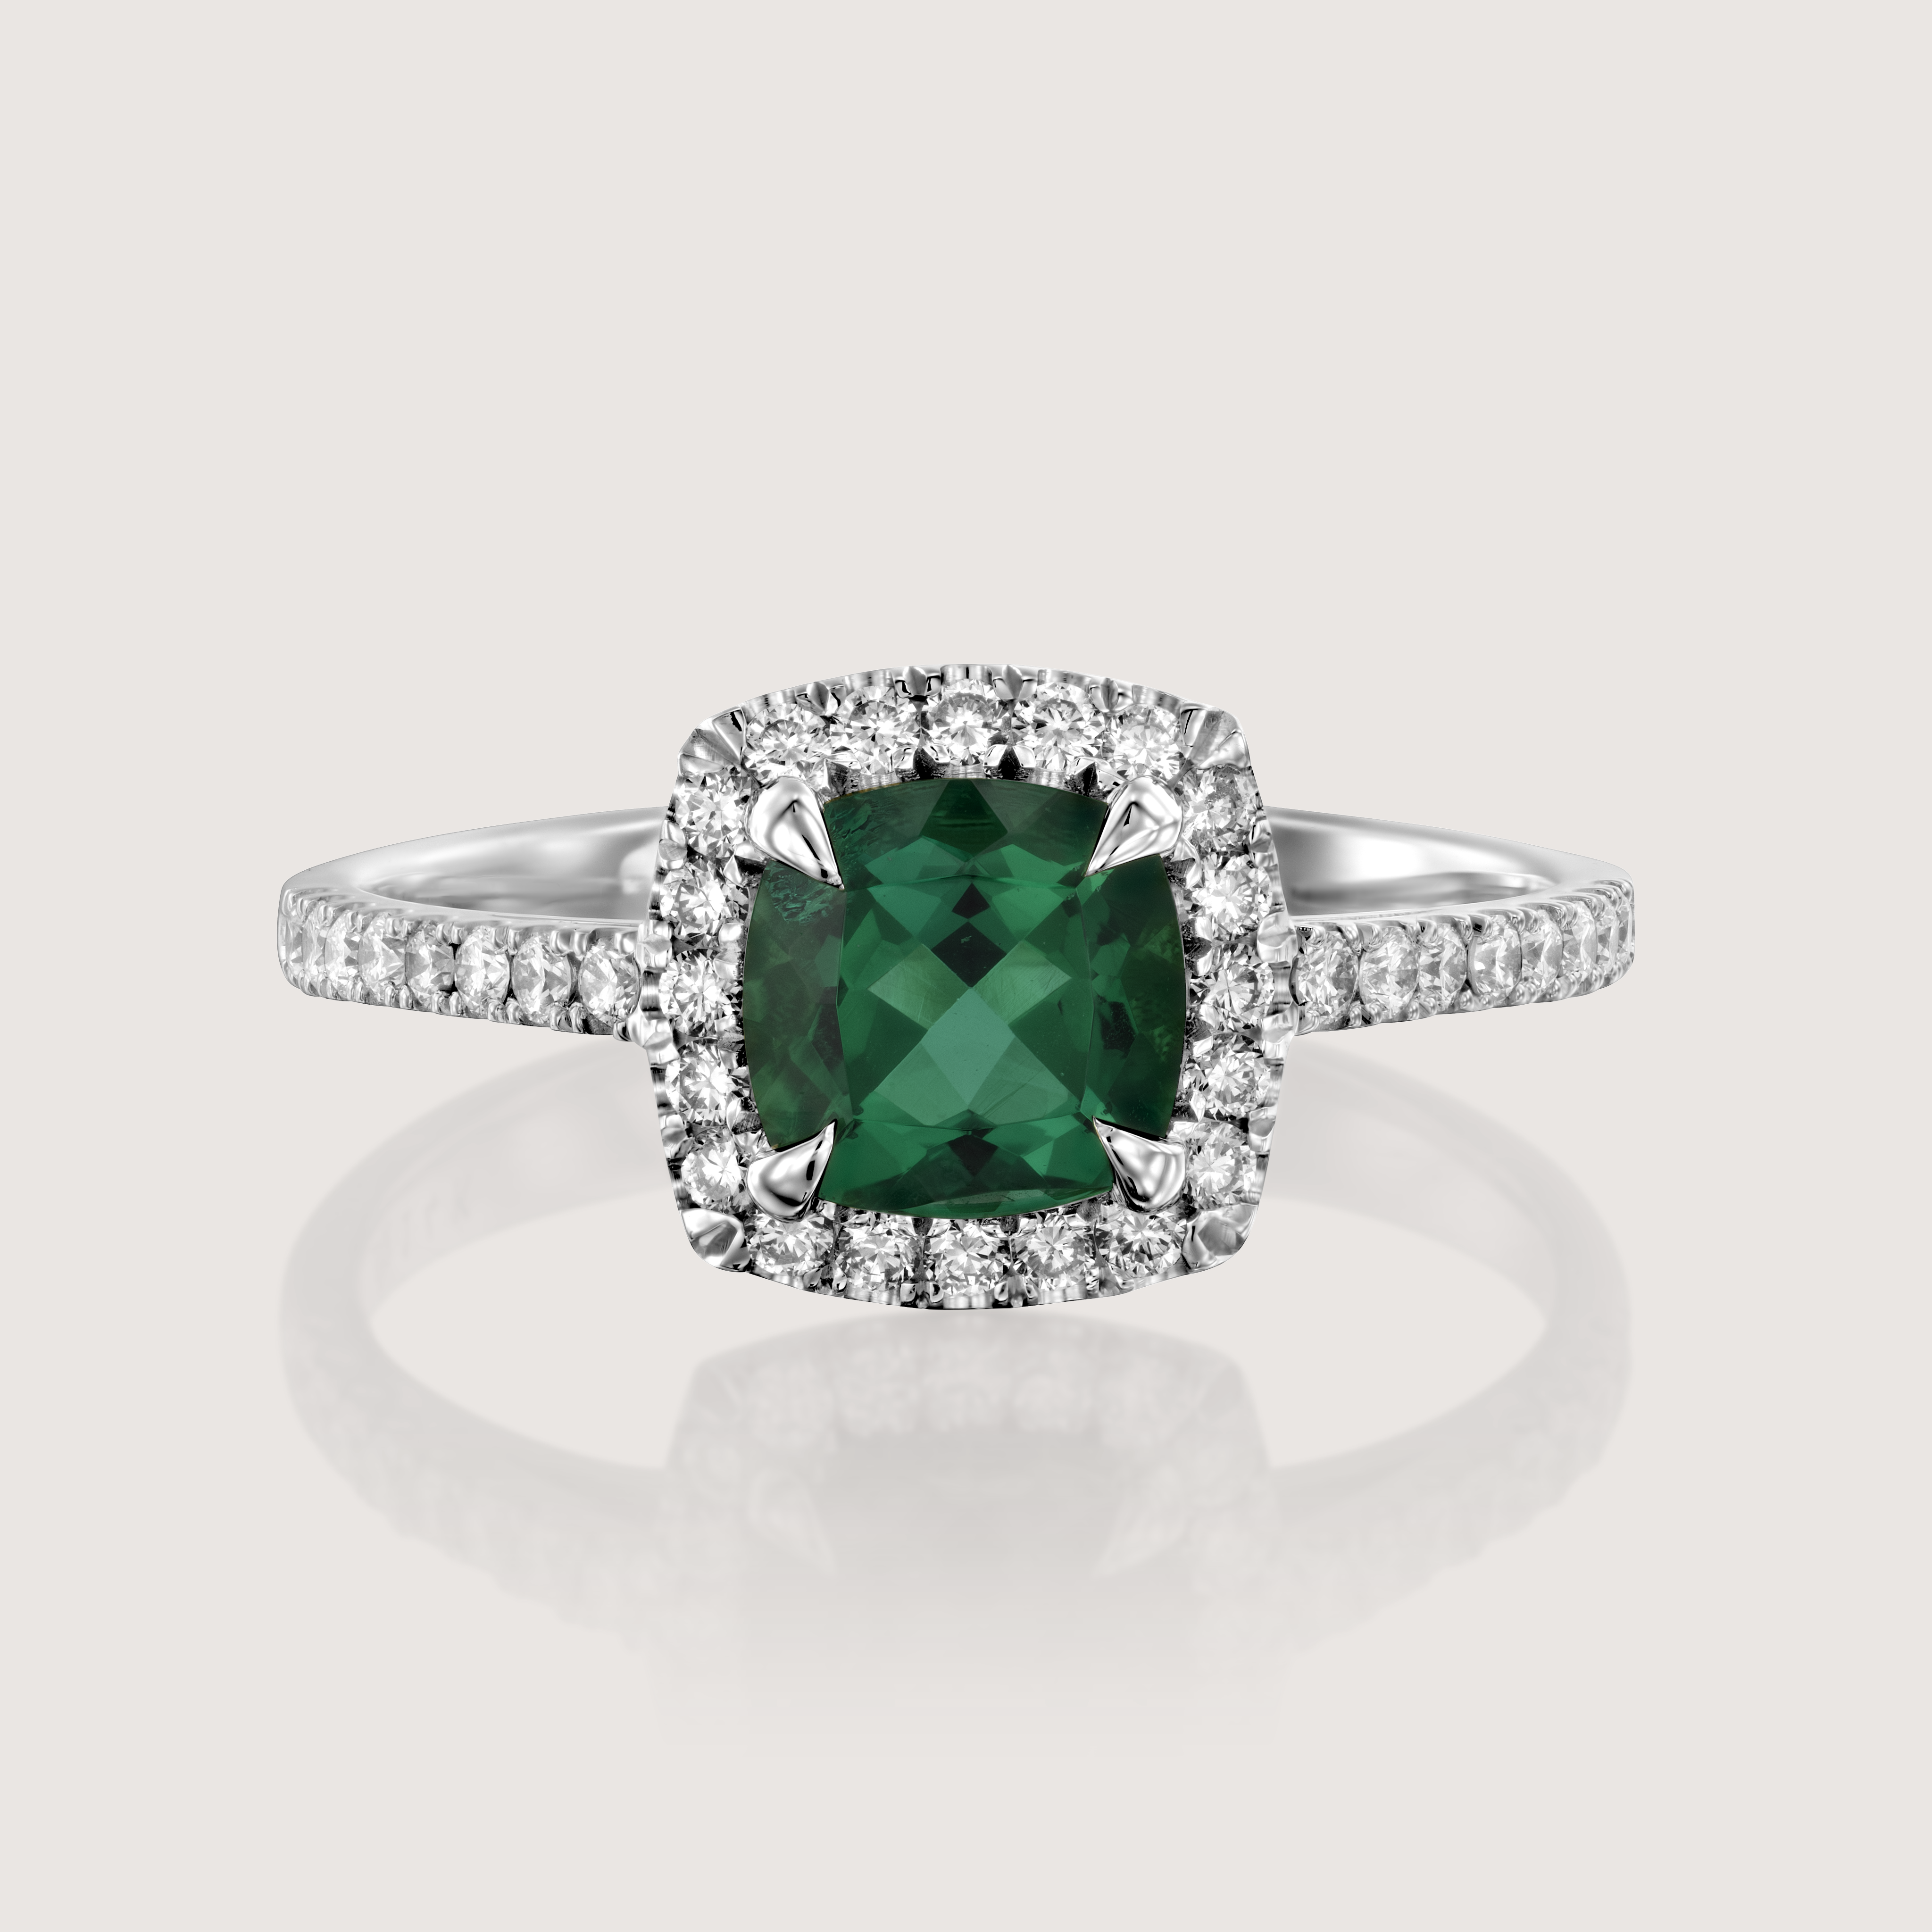 Rachel Ring With Emerald and Diamonds